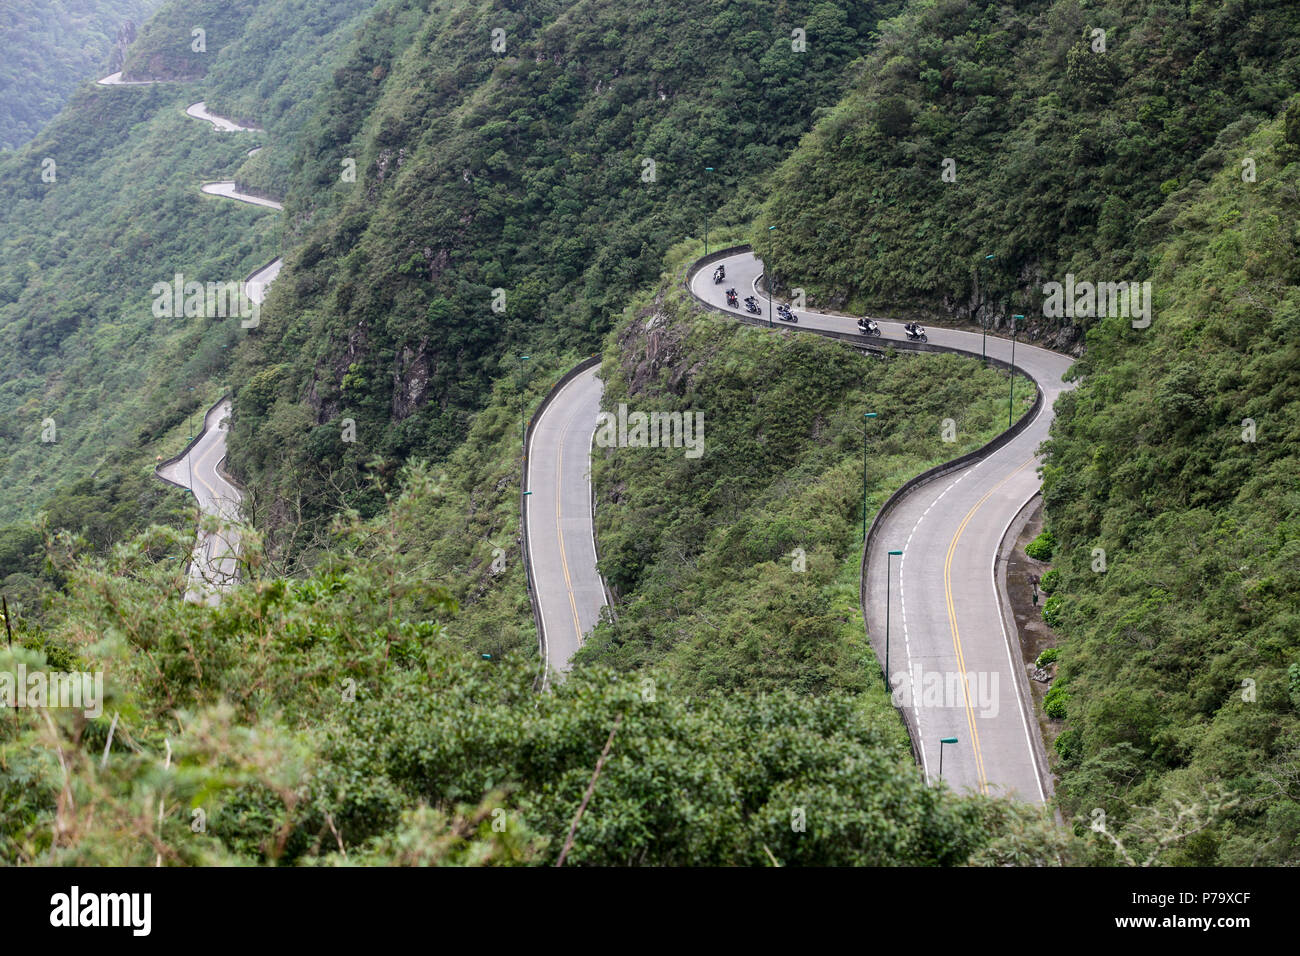 https://c8.alamy.com/comp/P79XCF/santa-catarina-brasil-speedy-motorcycles-riding-on-mountain-road-with-beautiful-landscape-P79XCF.jpg